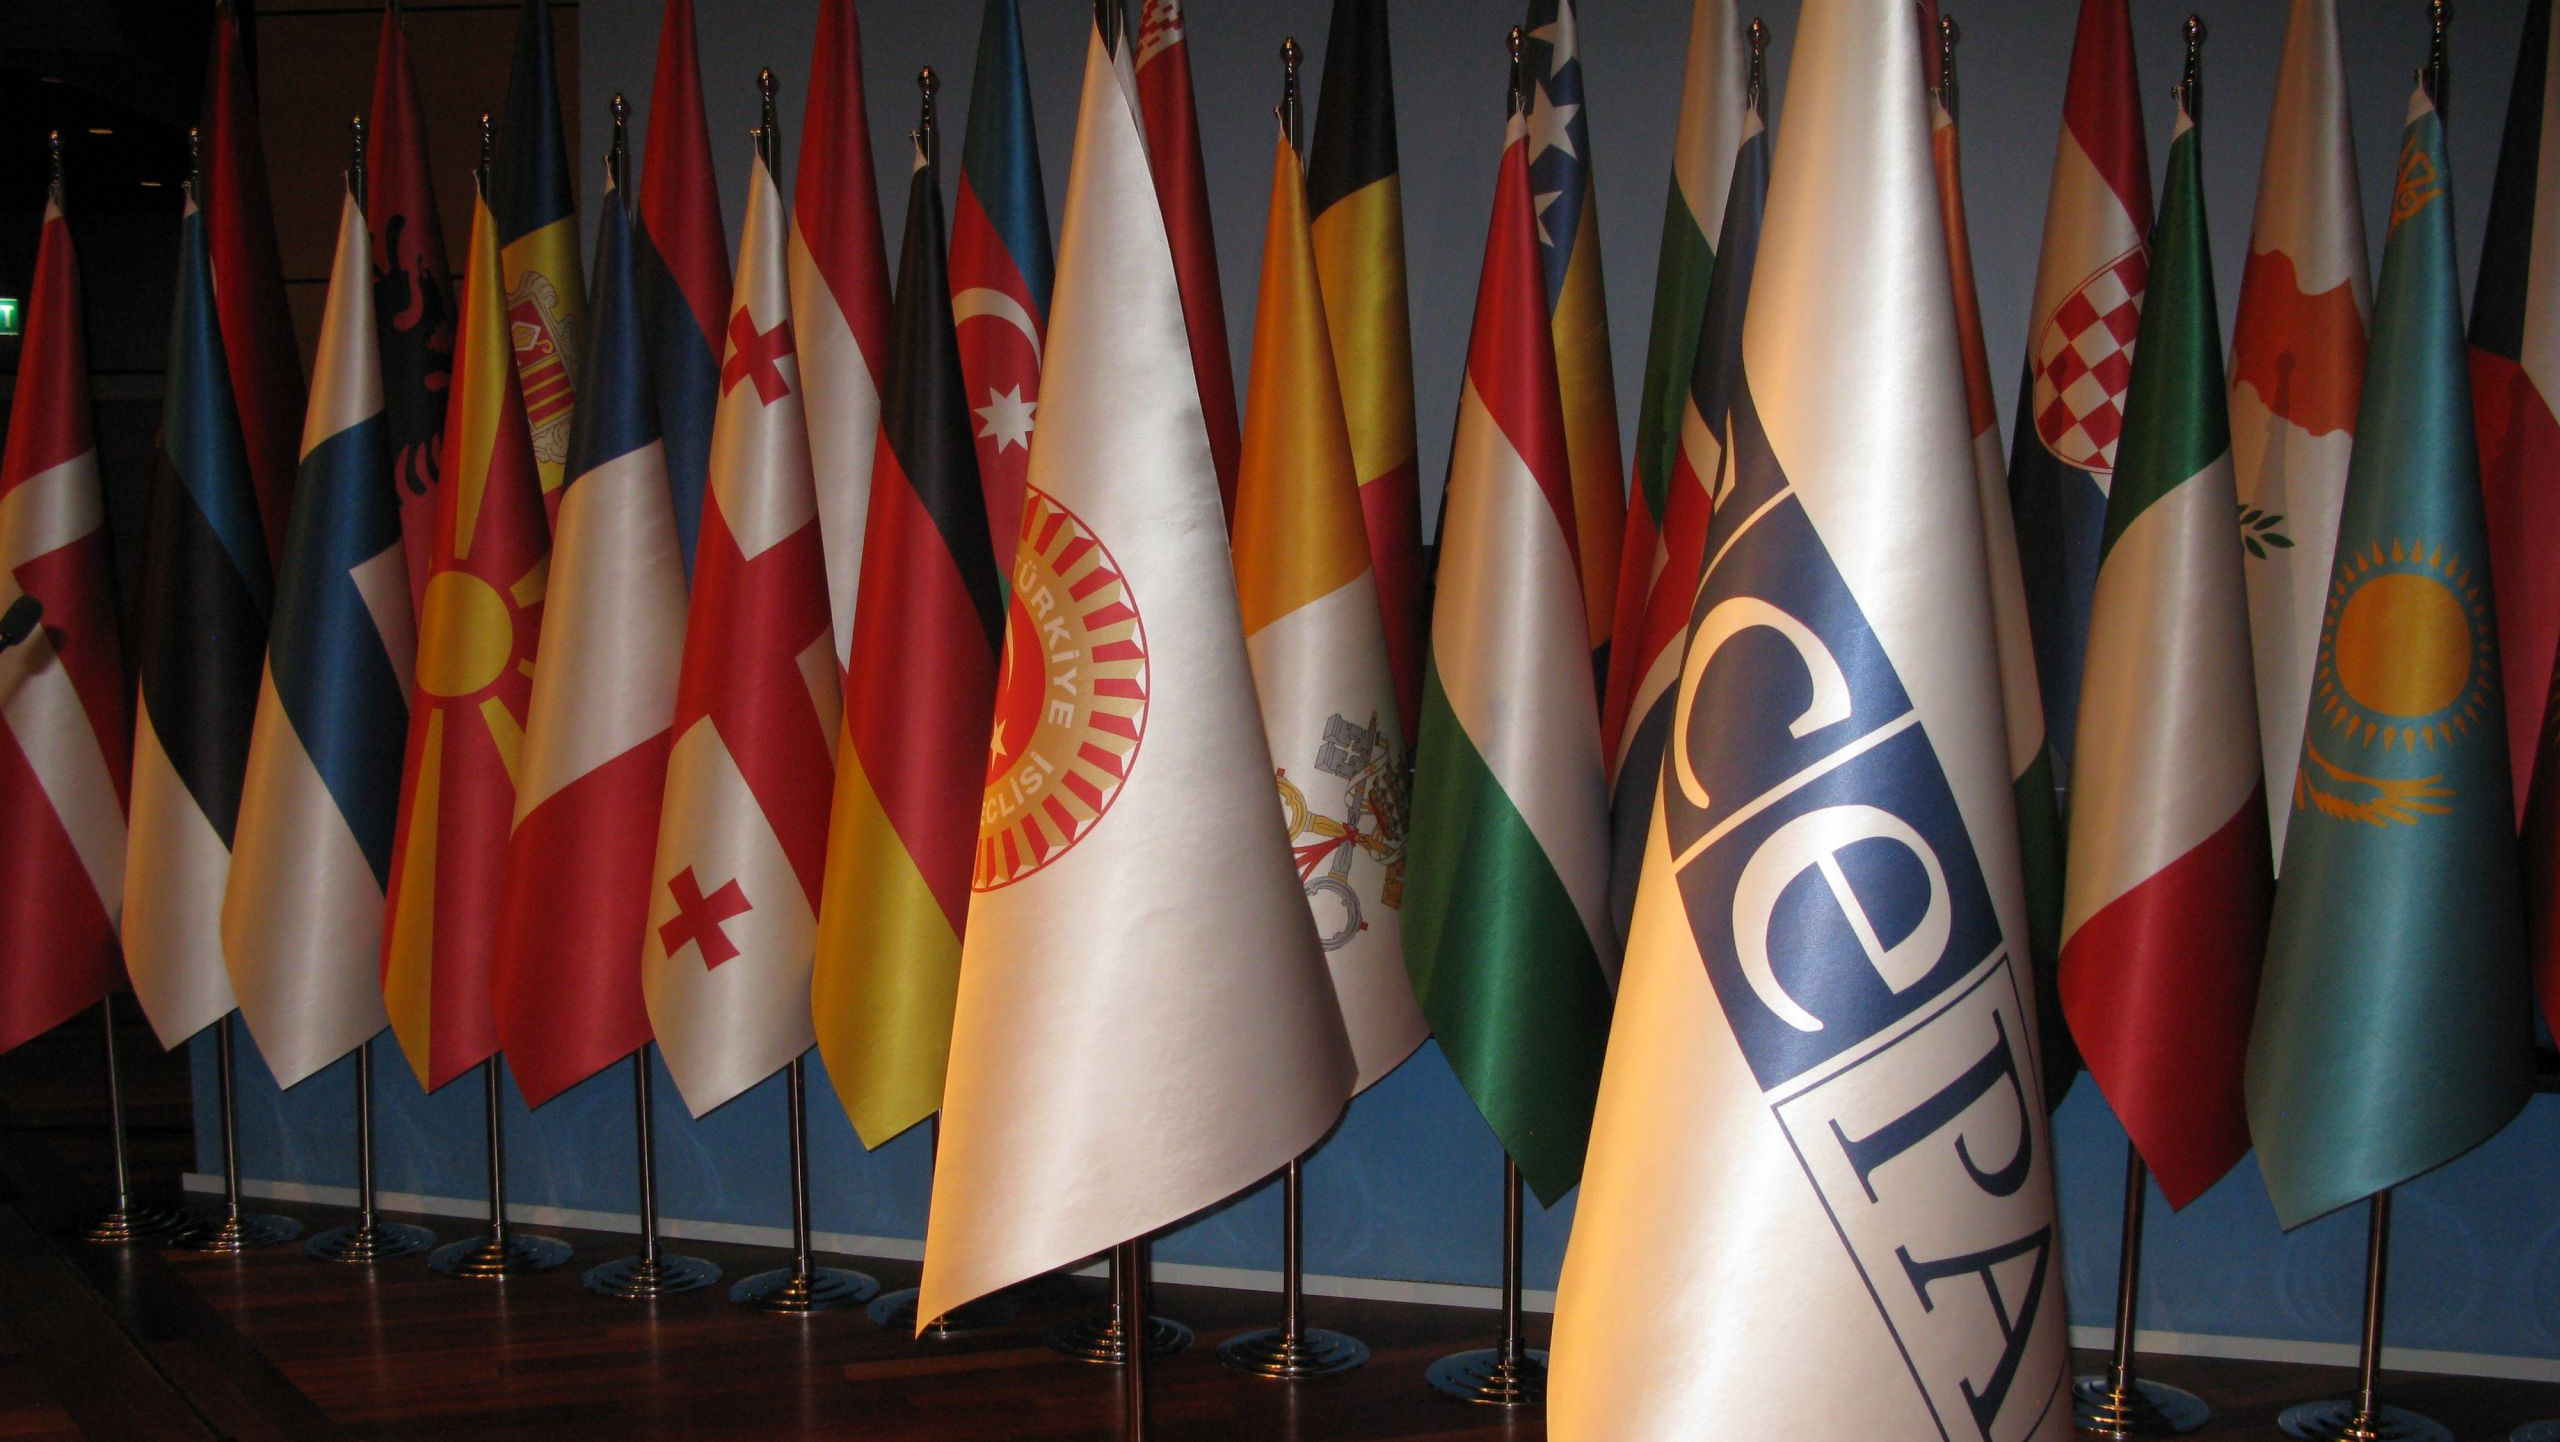 Флаги стран — участниц ОБСЕ